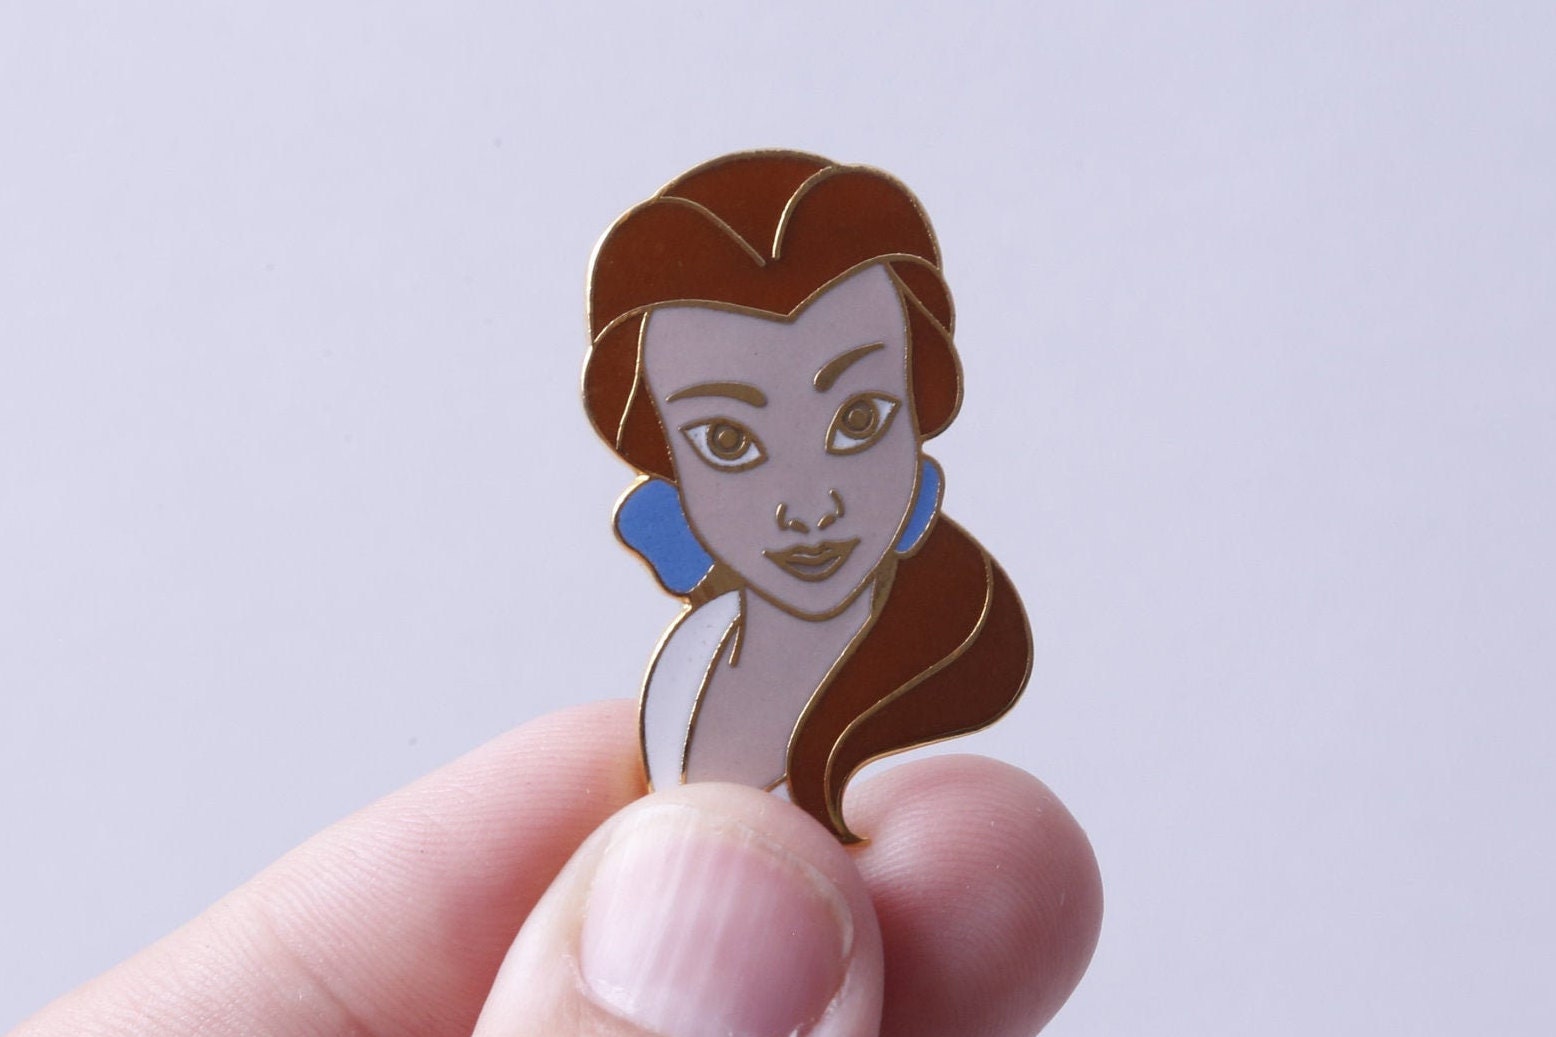 Beauty and the Beast Disney Pins Enamel Badge Jewelry Metal Pin